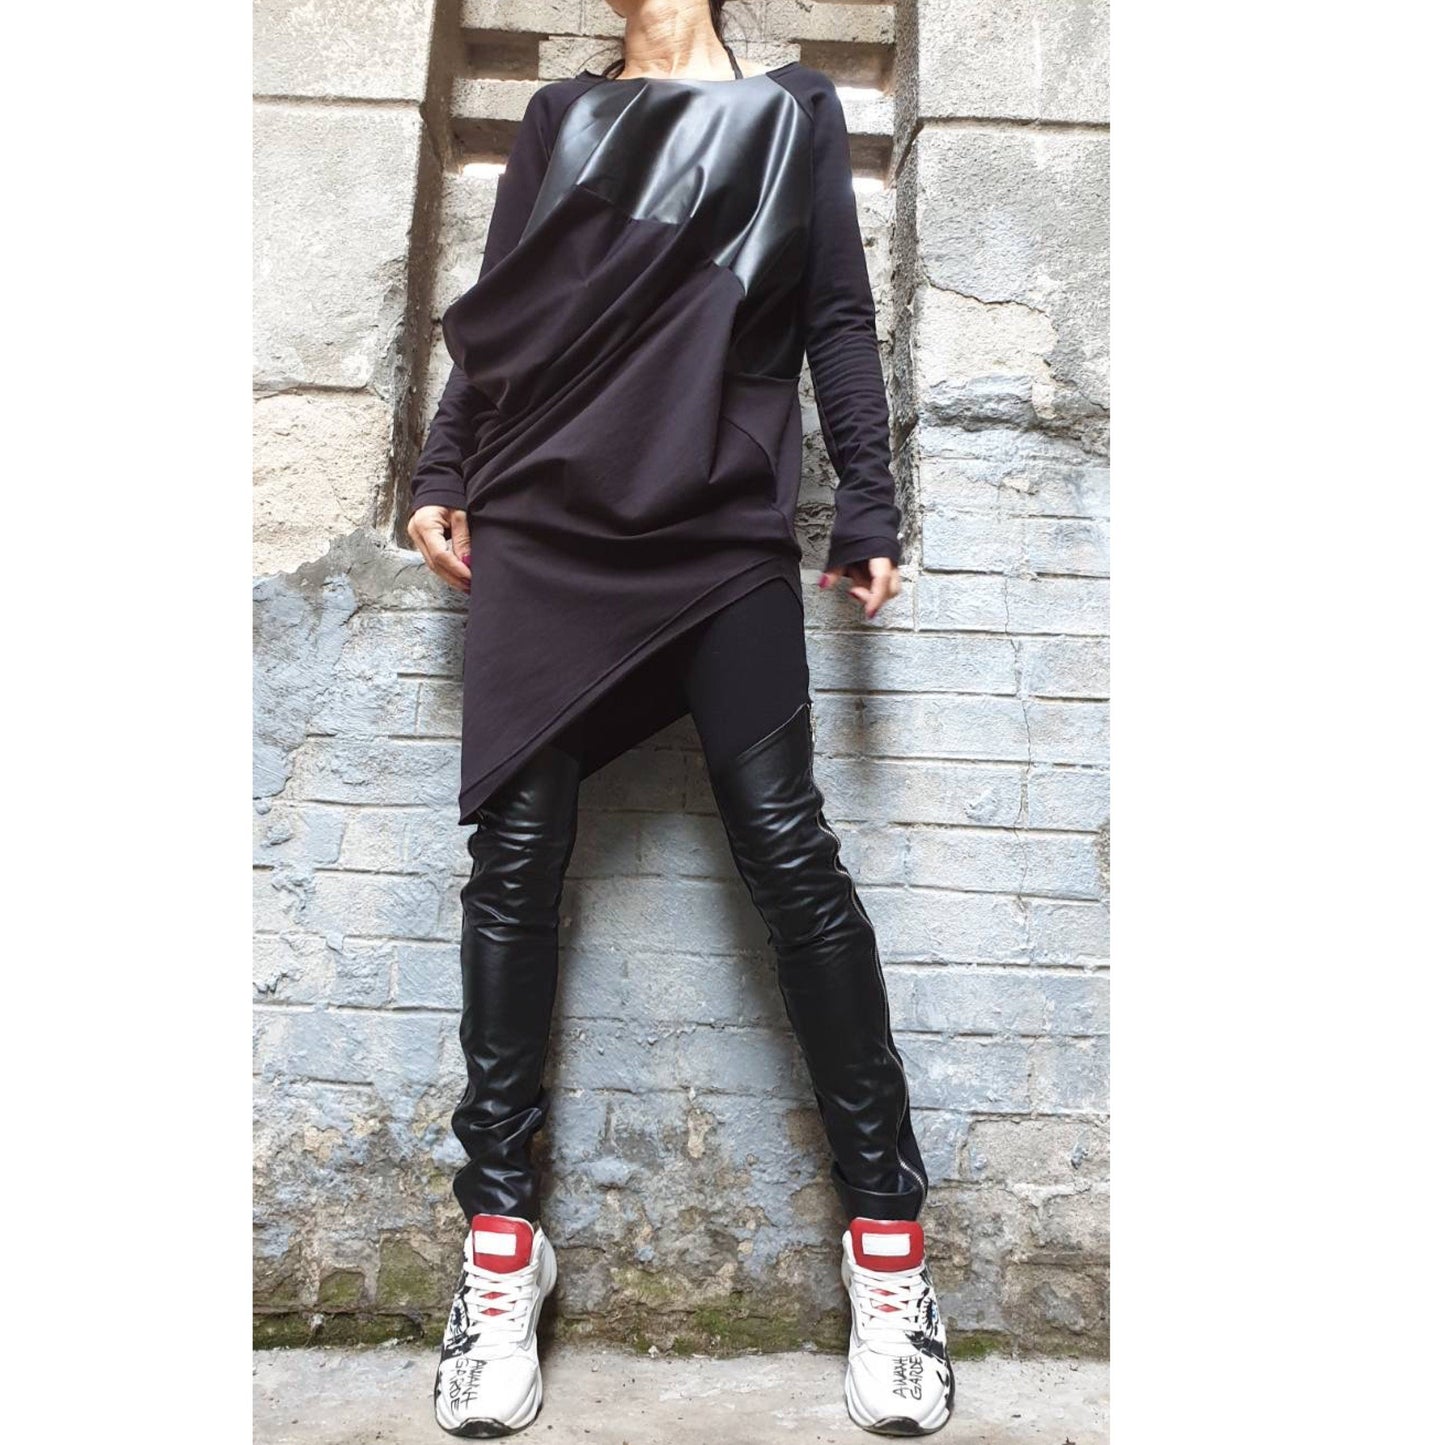 Urban Asymmetric Tunic - Handmade clothing from AngelBySilvia - Top Designer Brands 